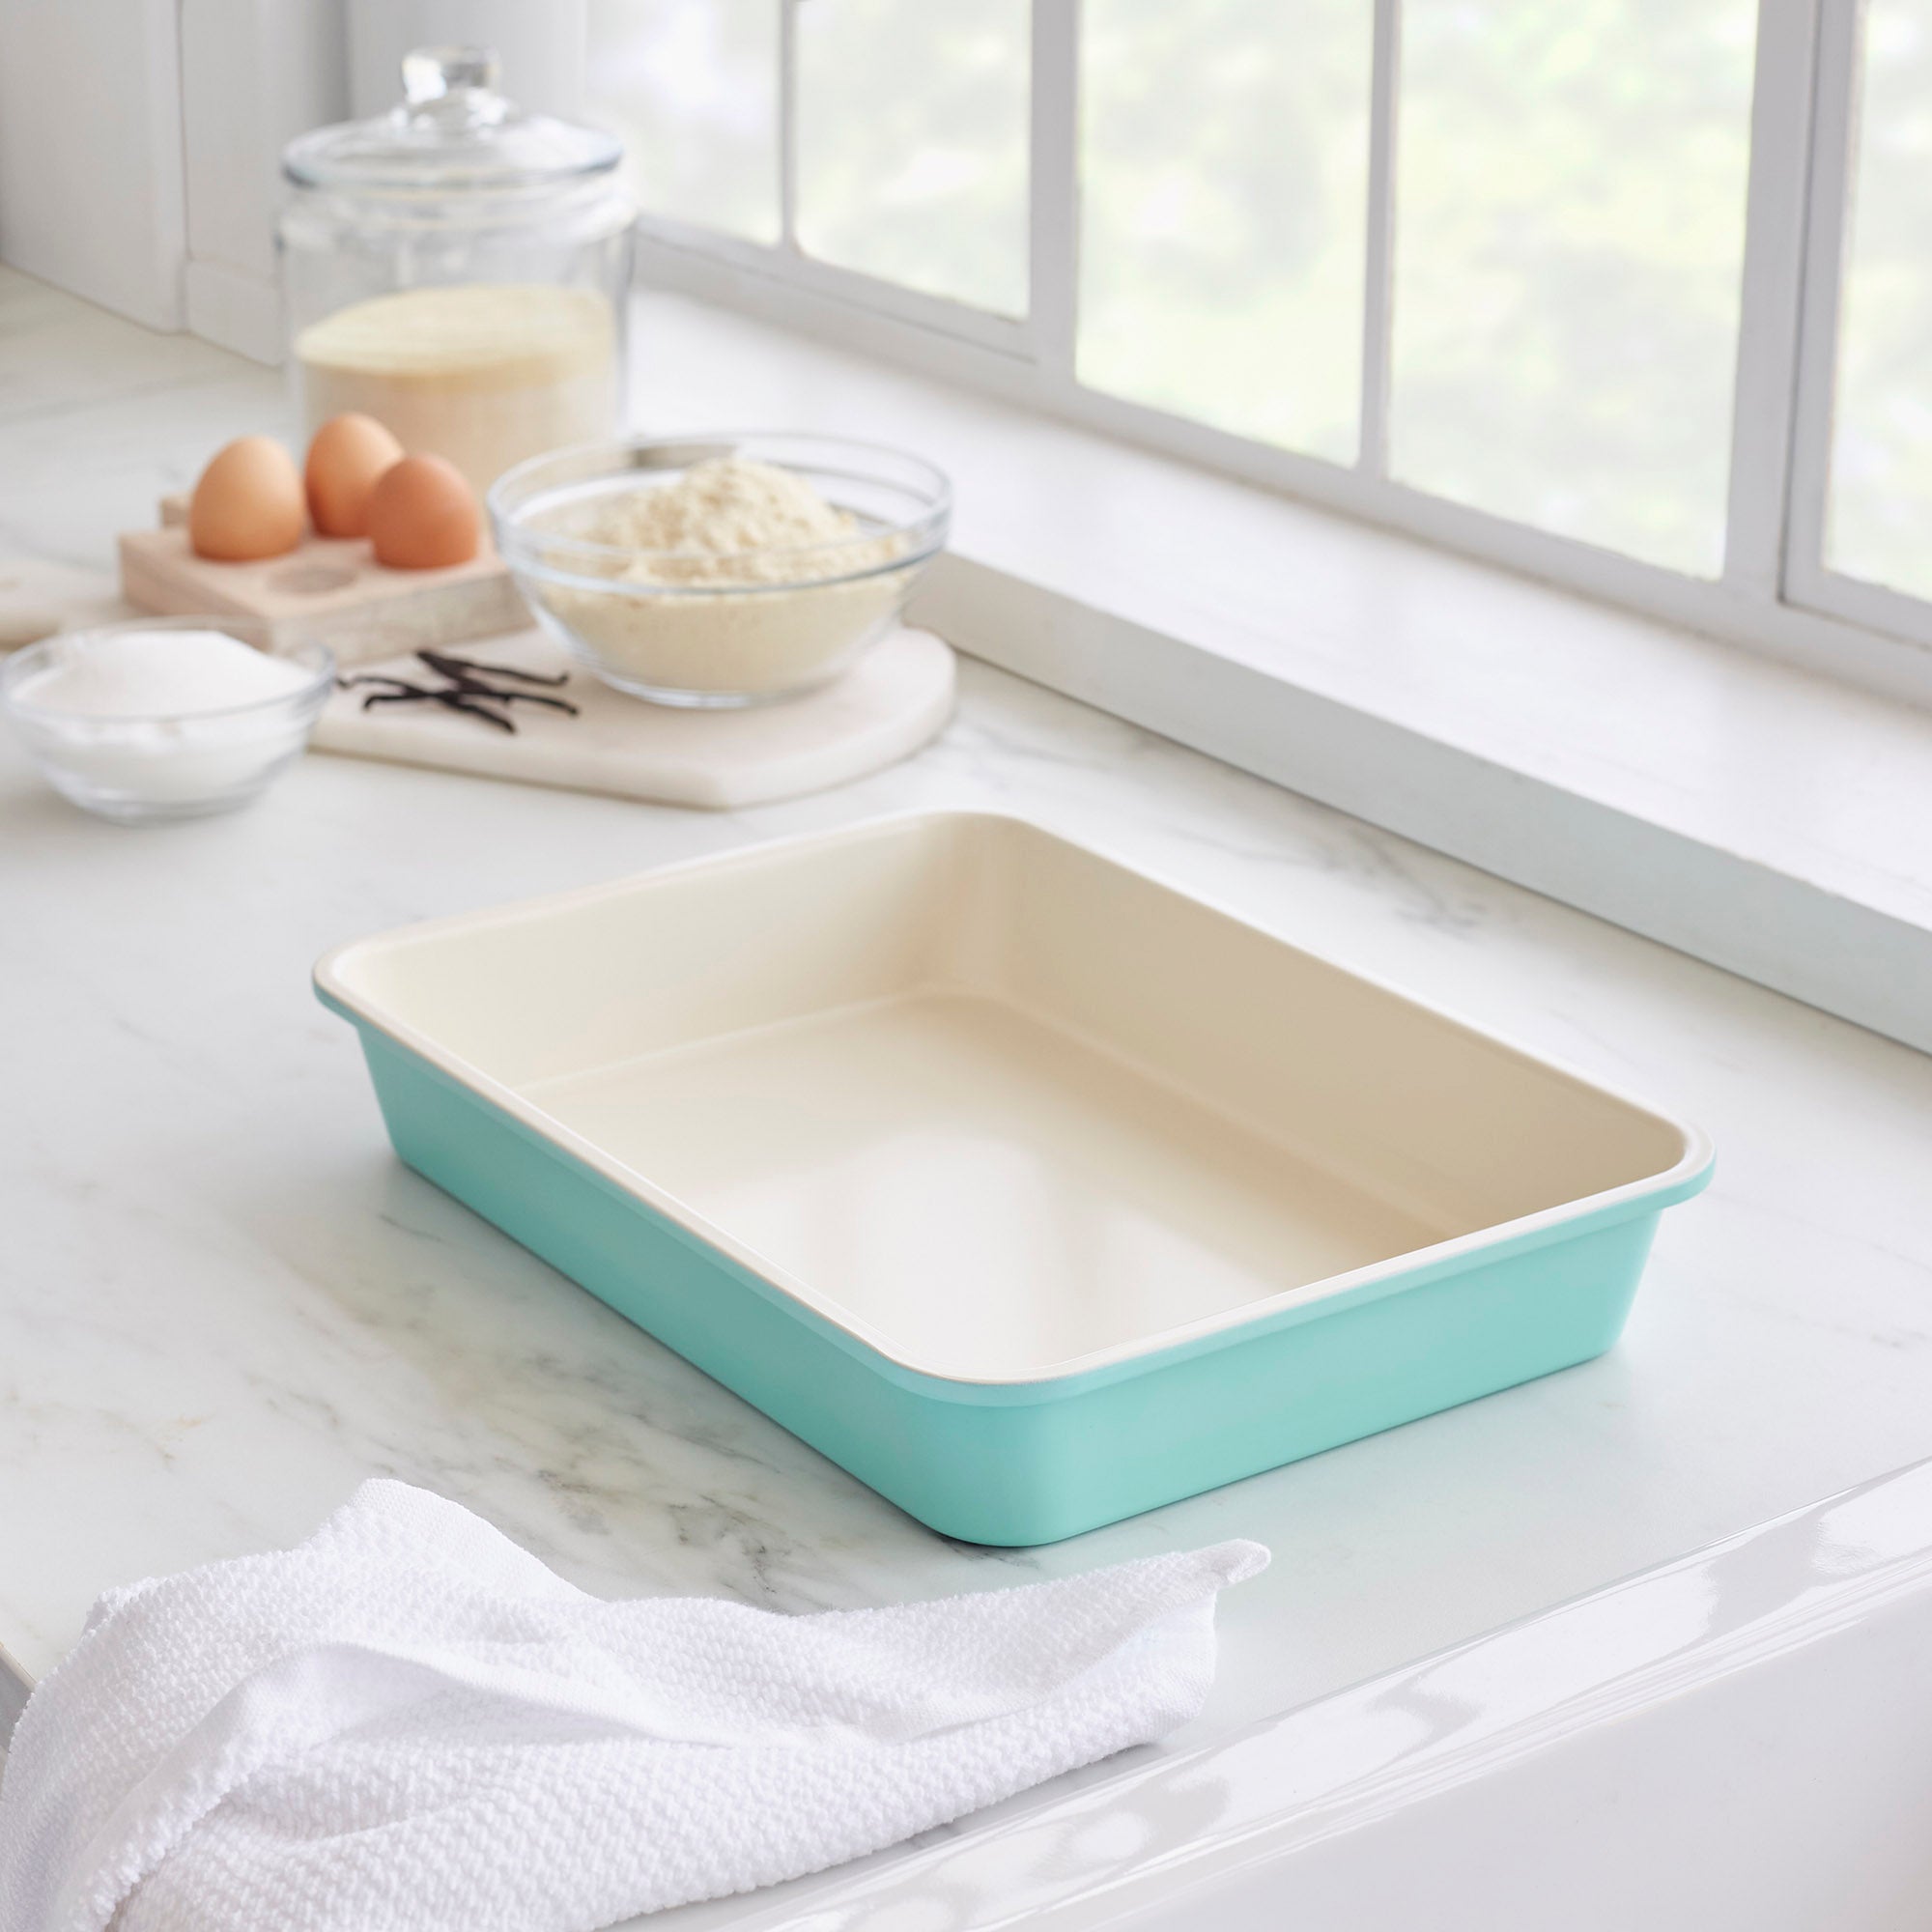 Pro-Release Nonstick Bakeware, Rectangular Baking Pan, 9 x 13 inch